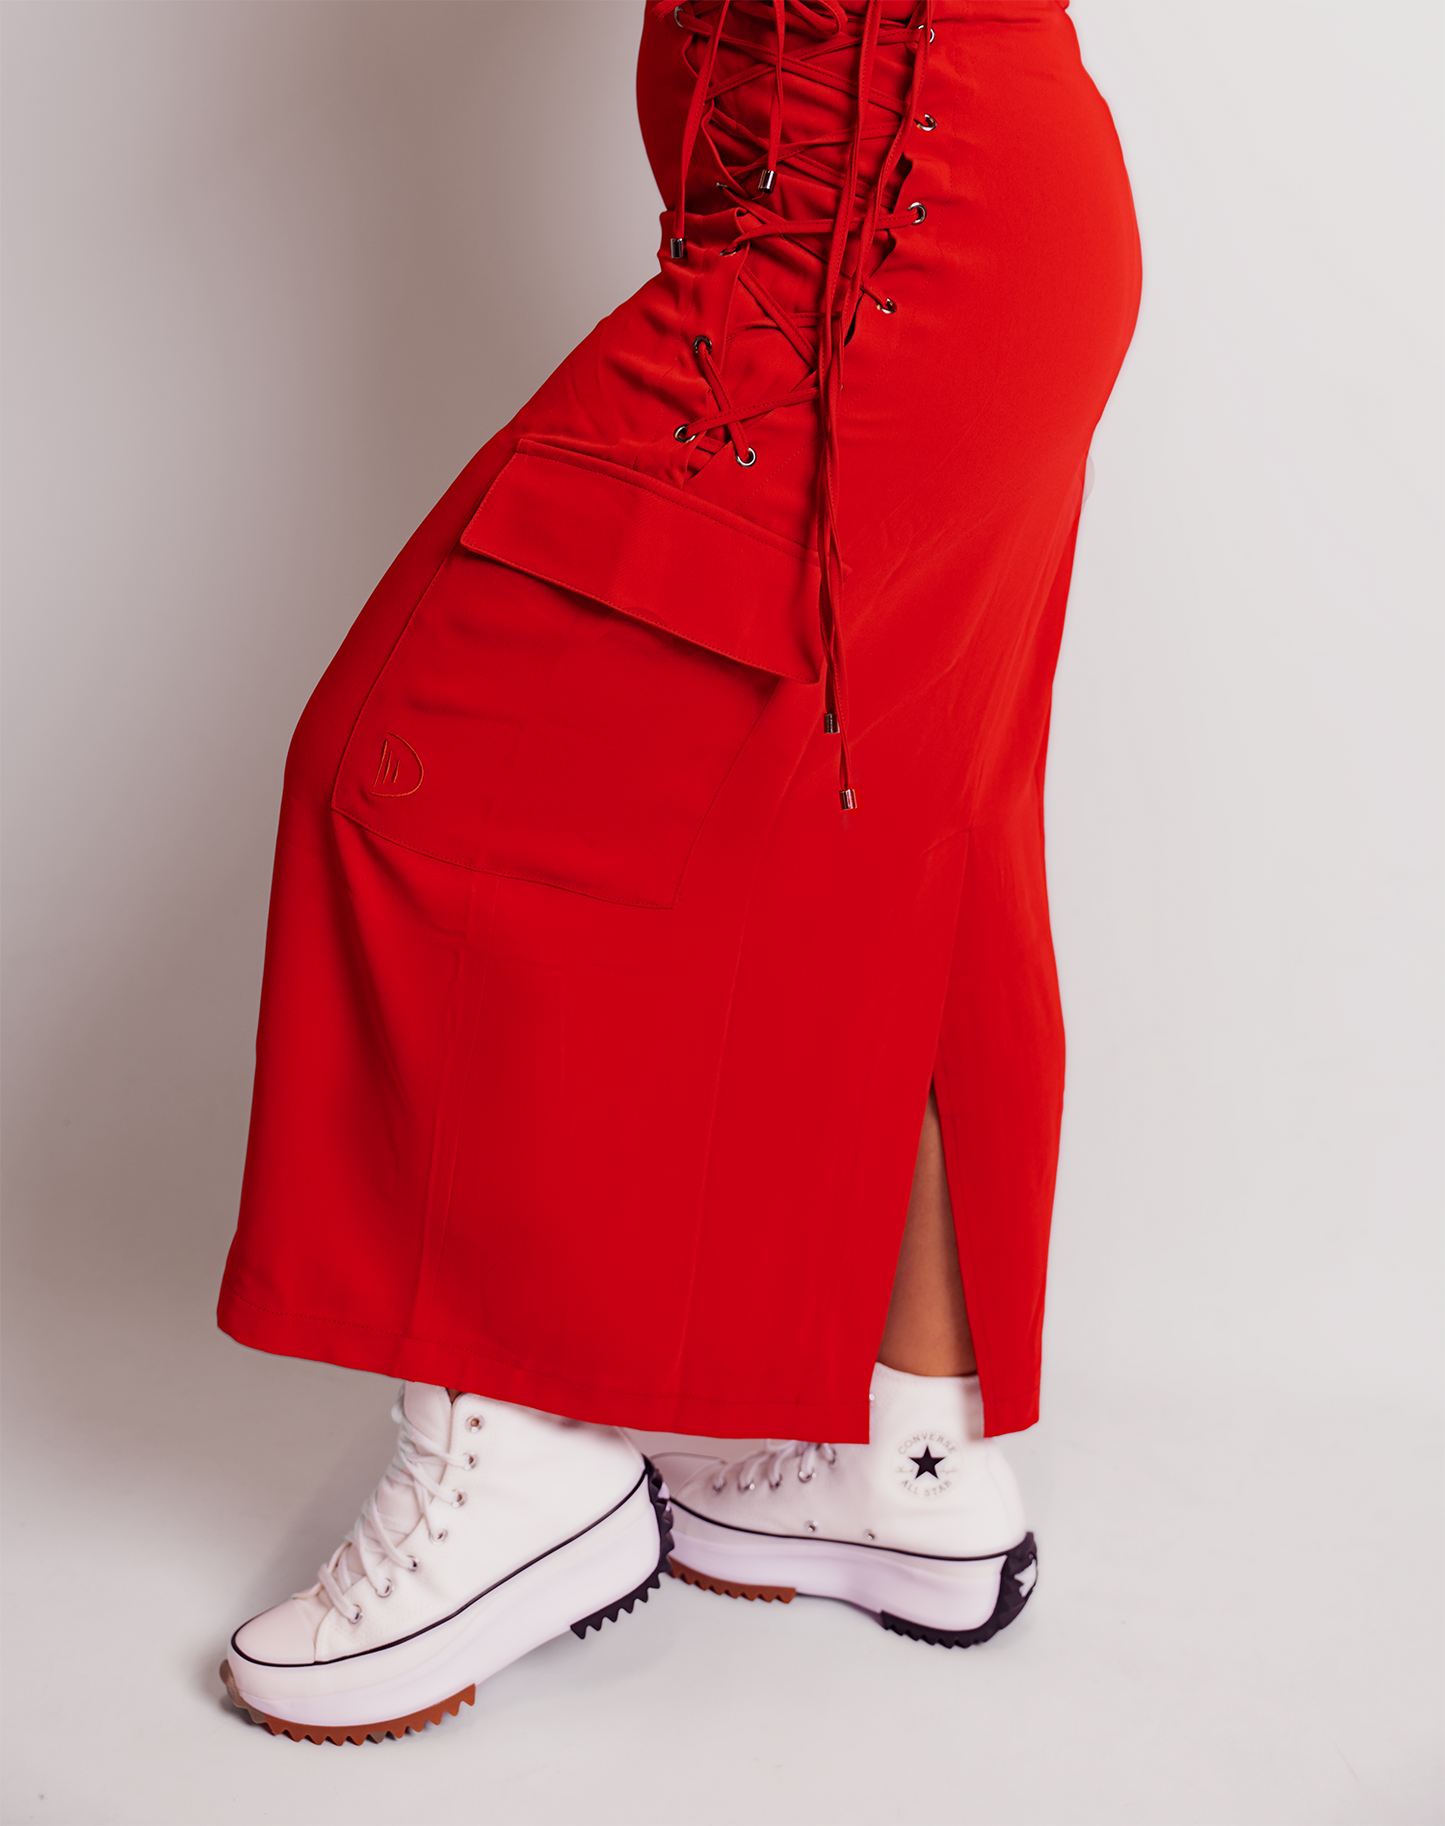 EMERALD Adjustable skirt RED